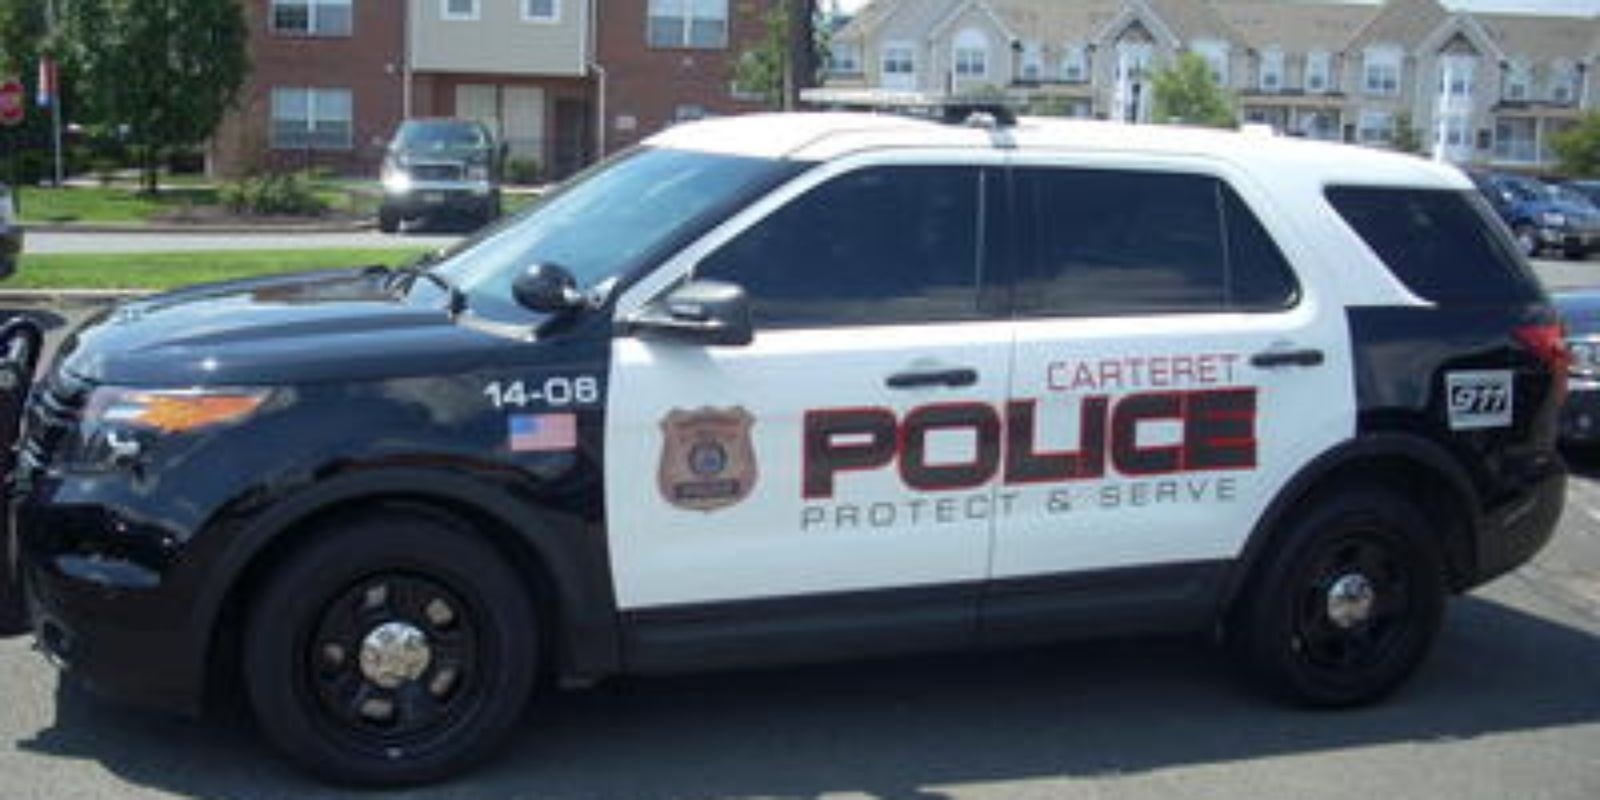 Carteret Police Department, NJ Public Safety Jobs